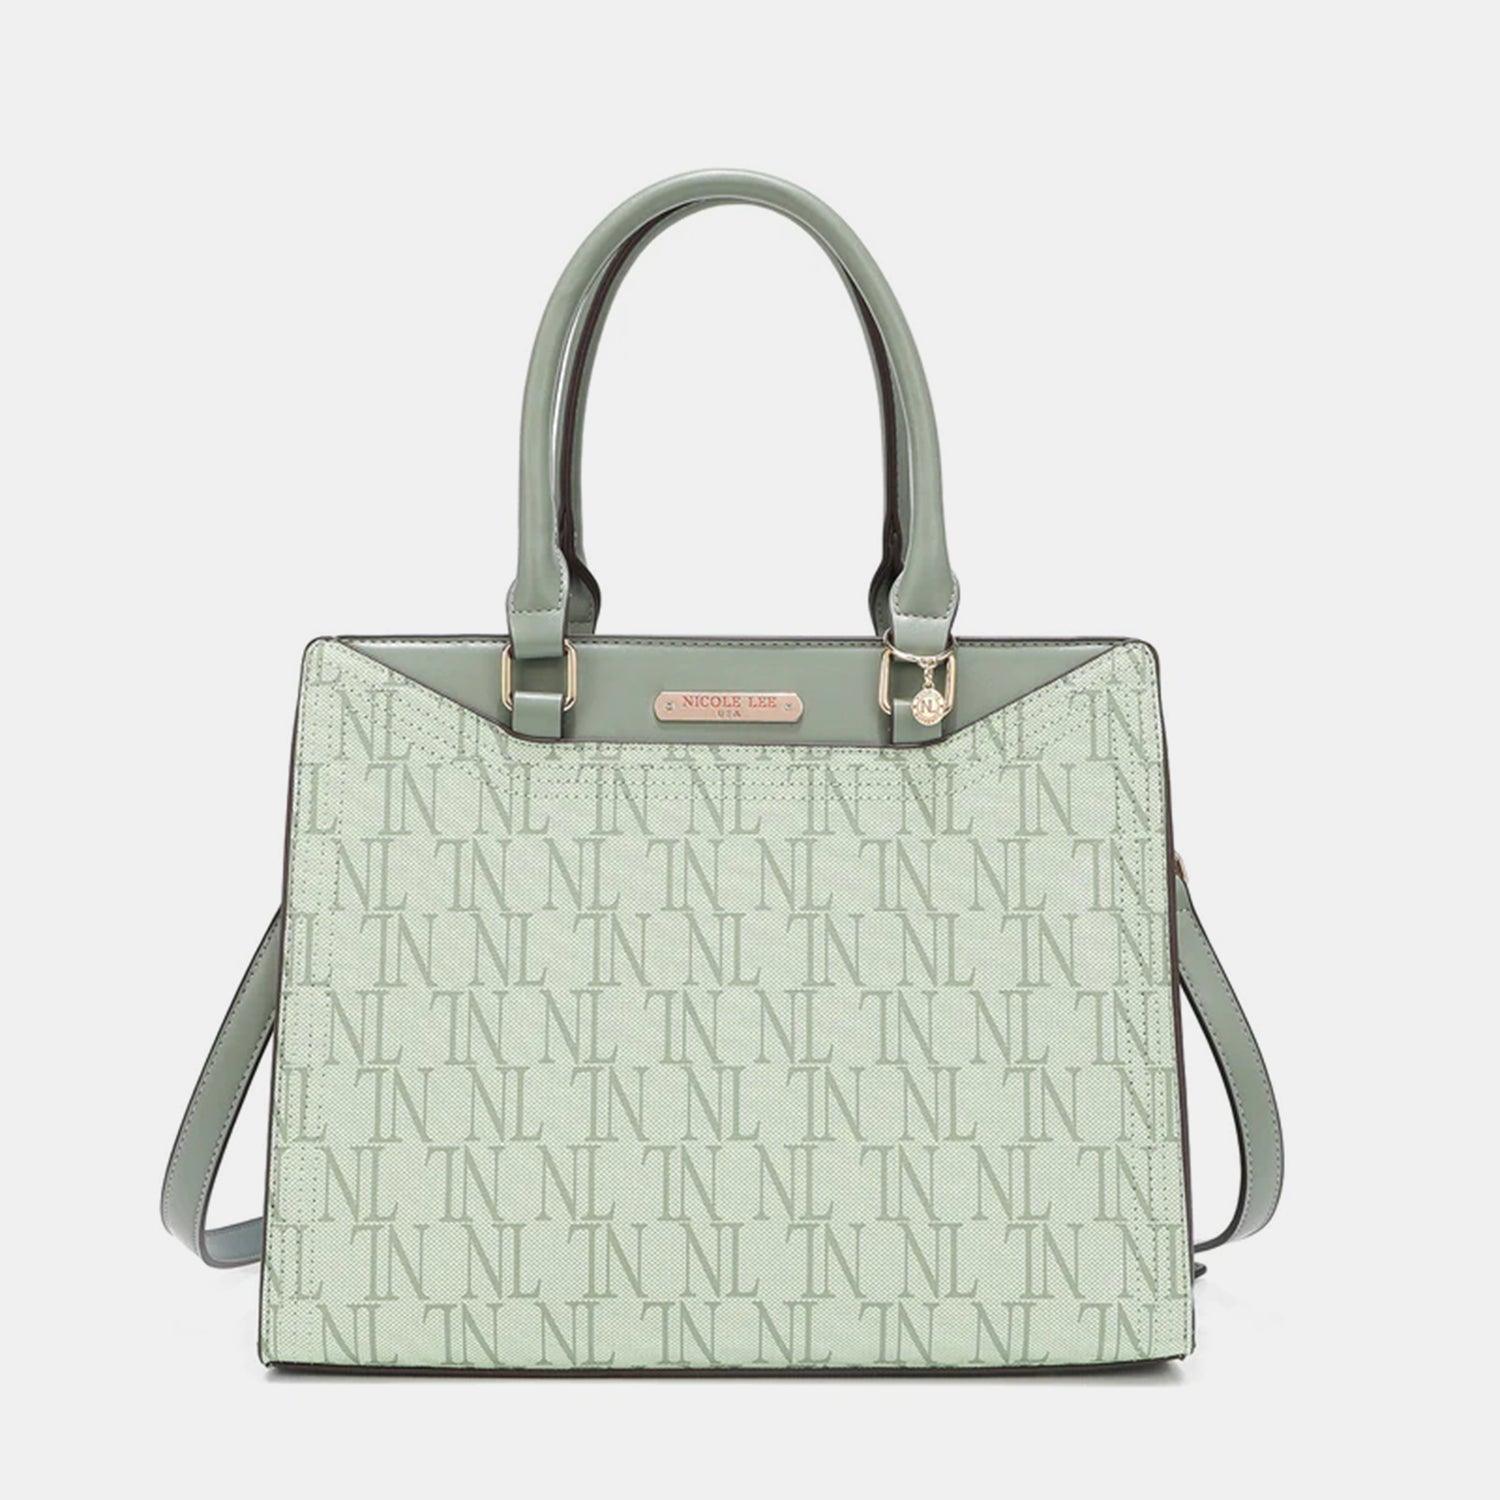 a green handbag with a logo on it